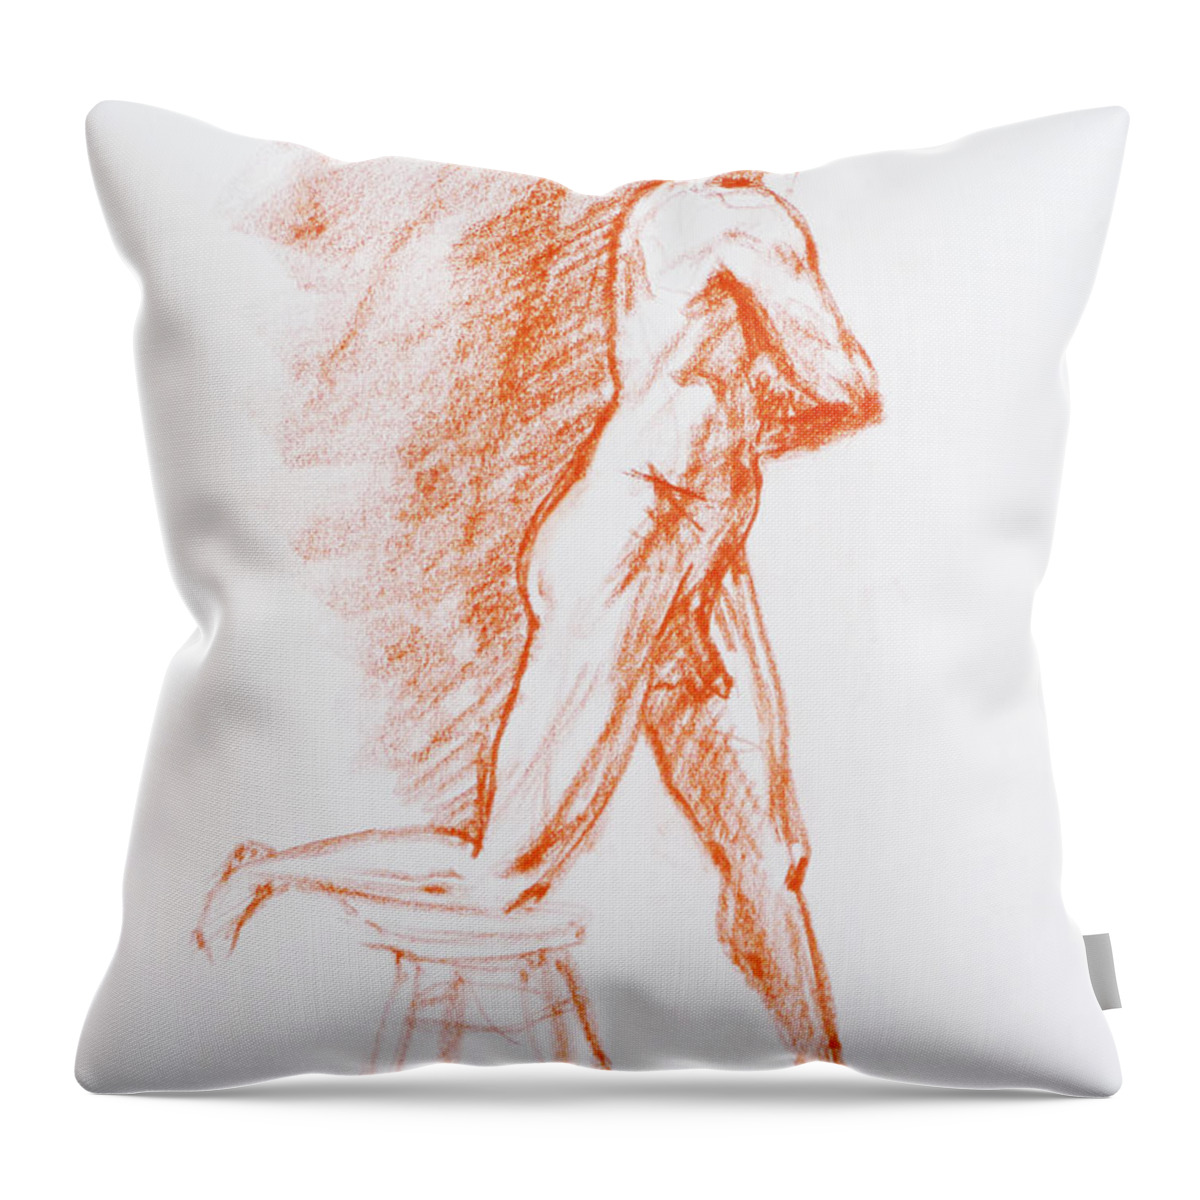 Man Throw Pillow featuring the drawing Figure Drawing Study III by Irina Sztukowski